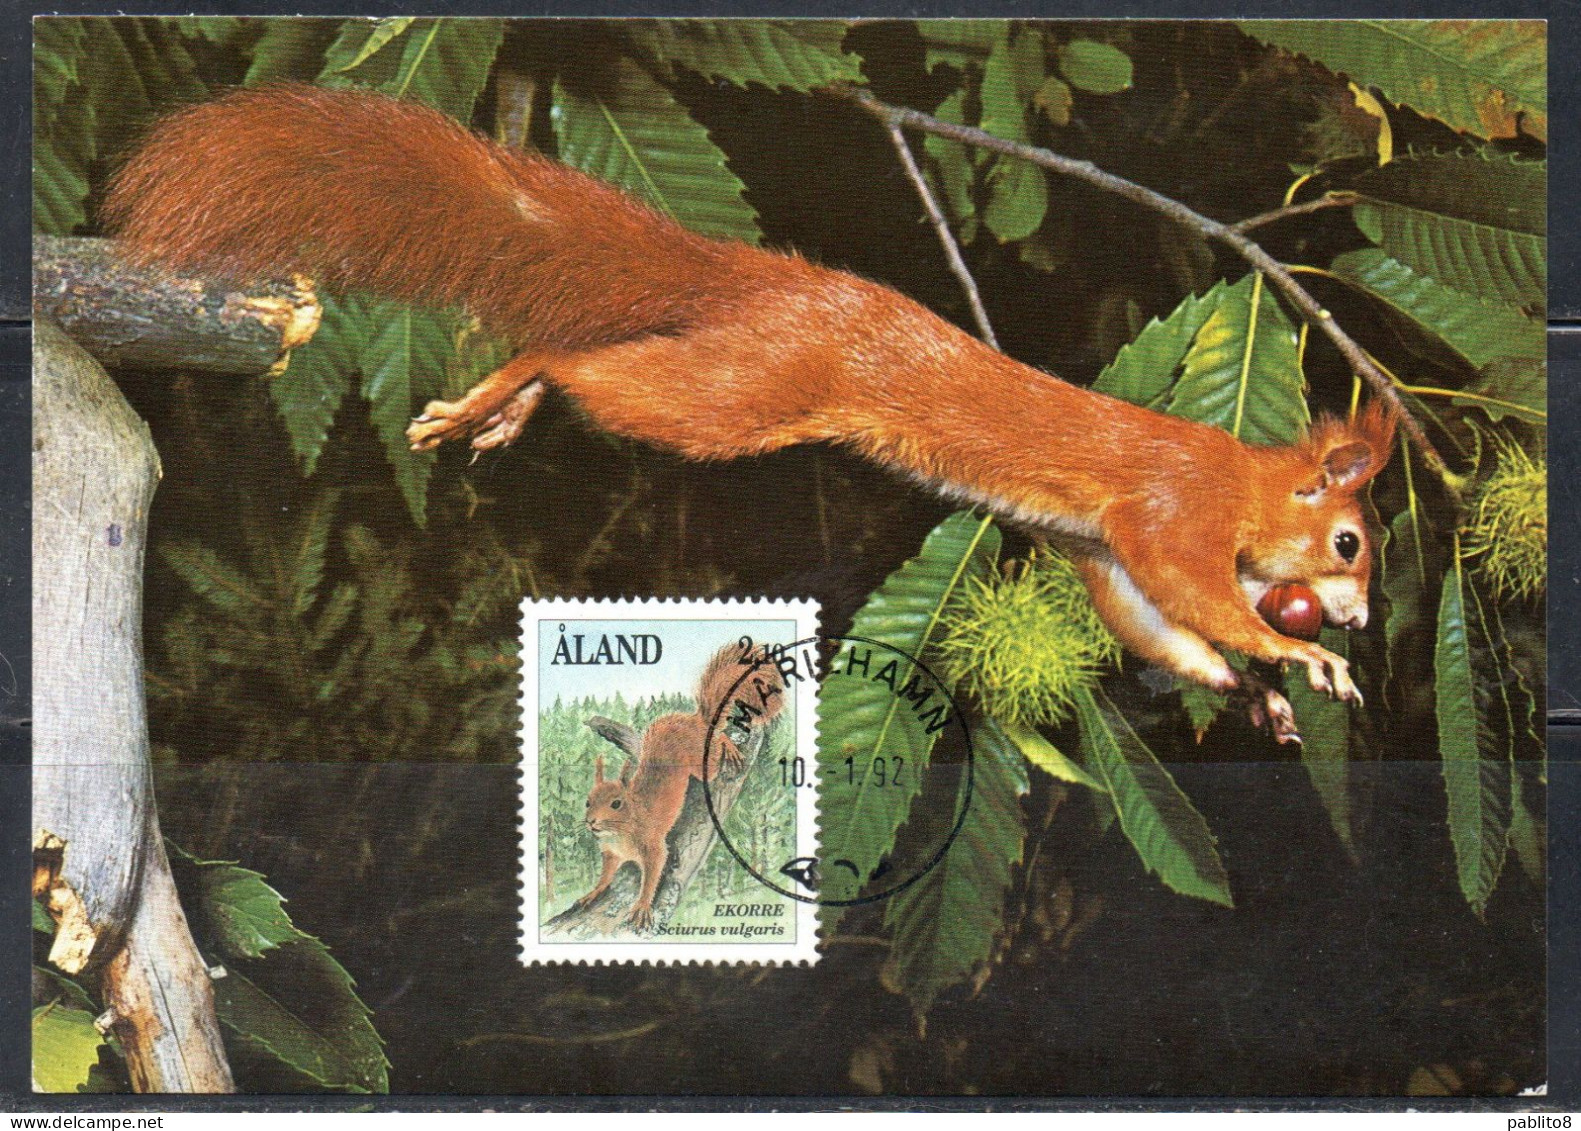 ALAND 1989 1994 1992 FAUNA ANIMALS SCIURUS VULGARIS 2.10m MAXI MAXIMUM CARD CARTE - Aland